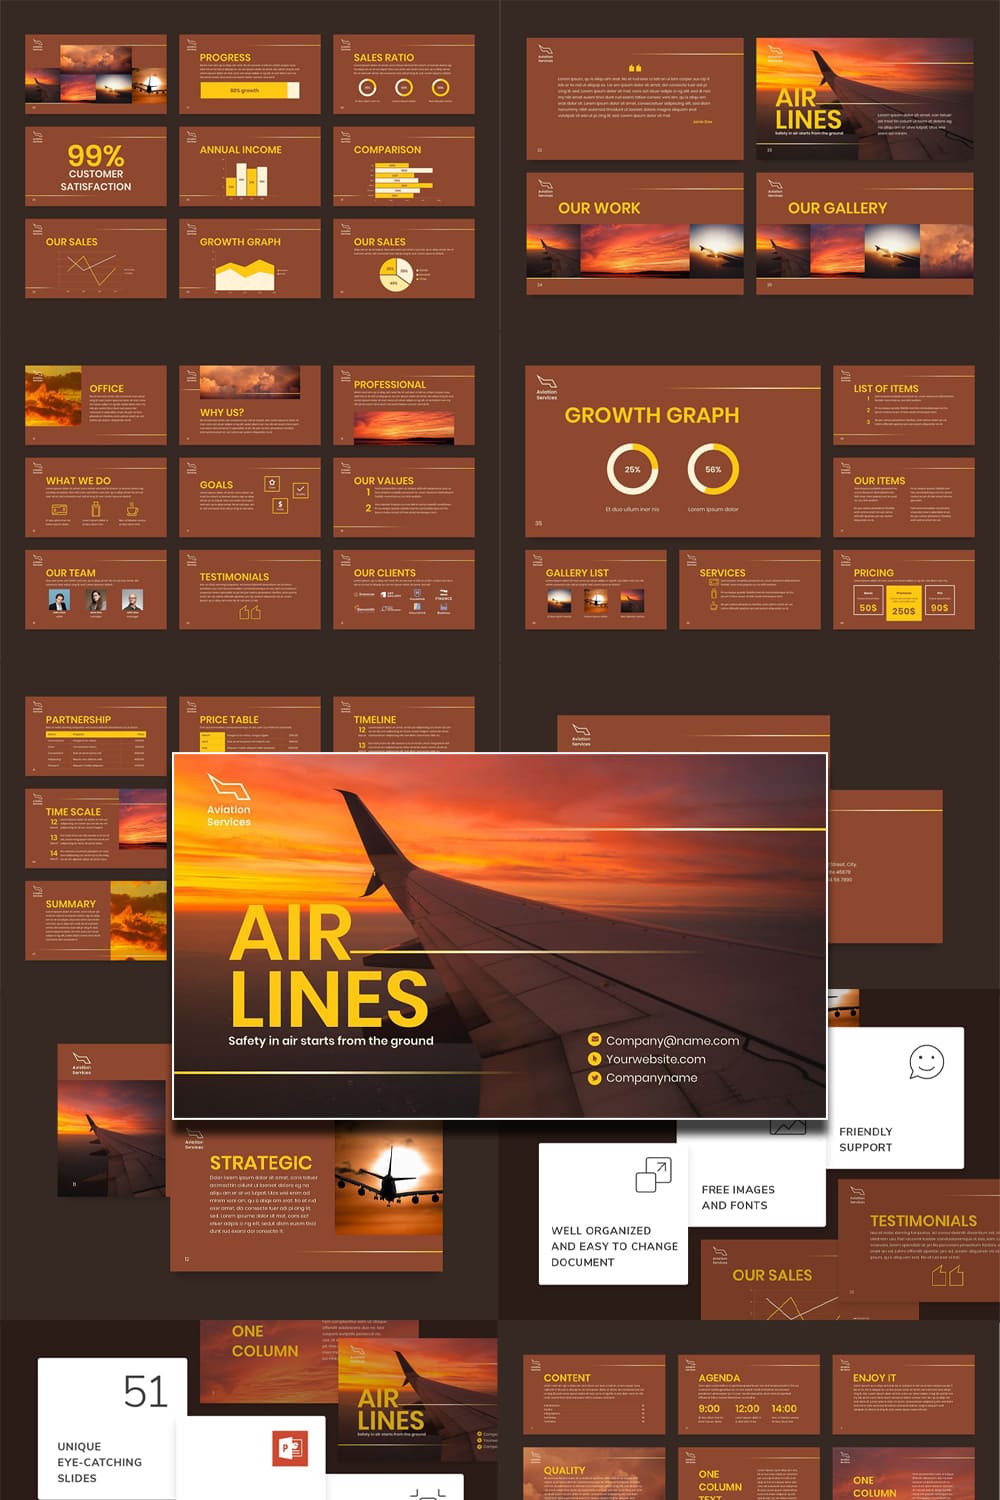 Presentation Aviation Airlines Pinterest.